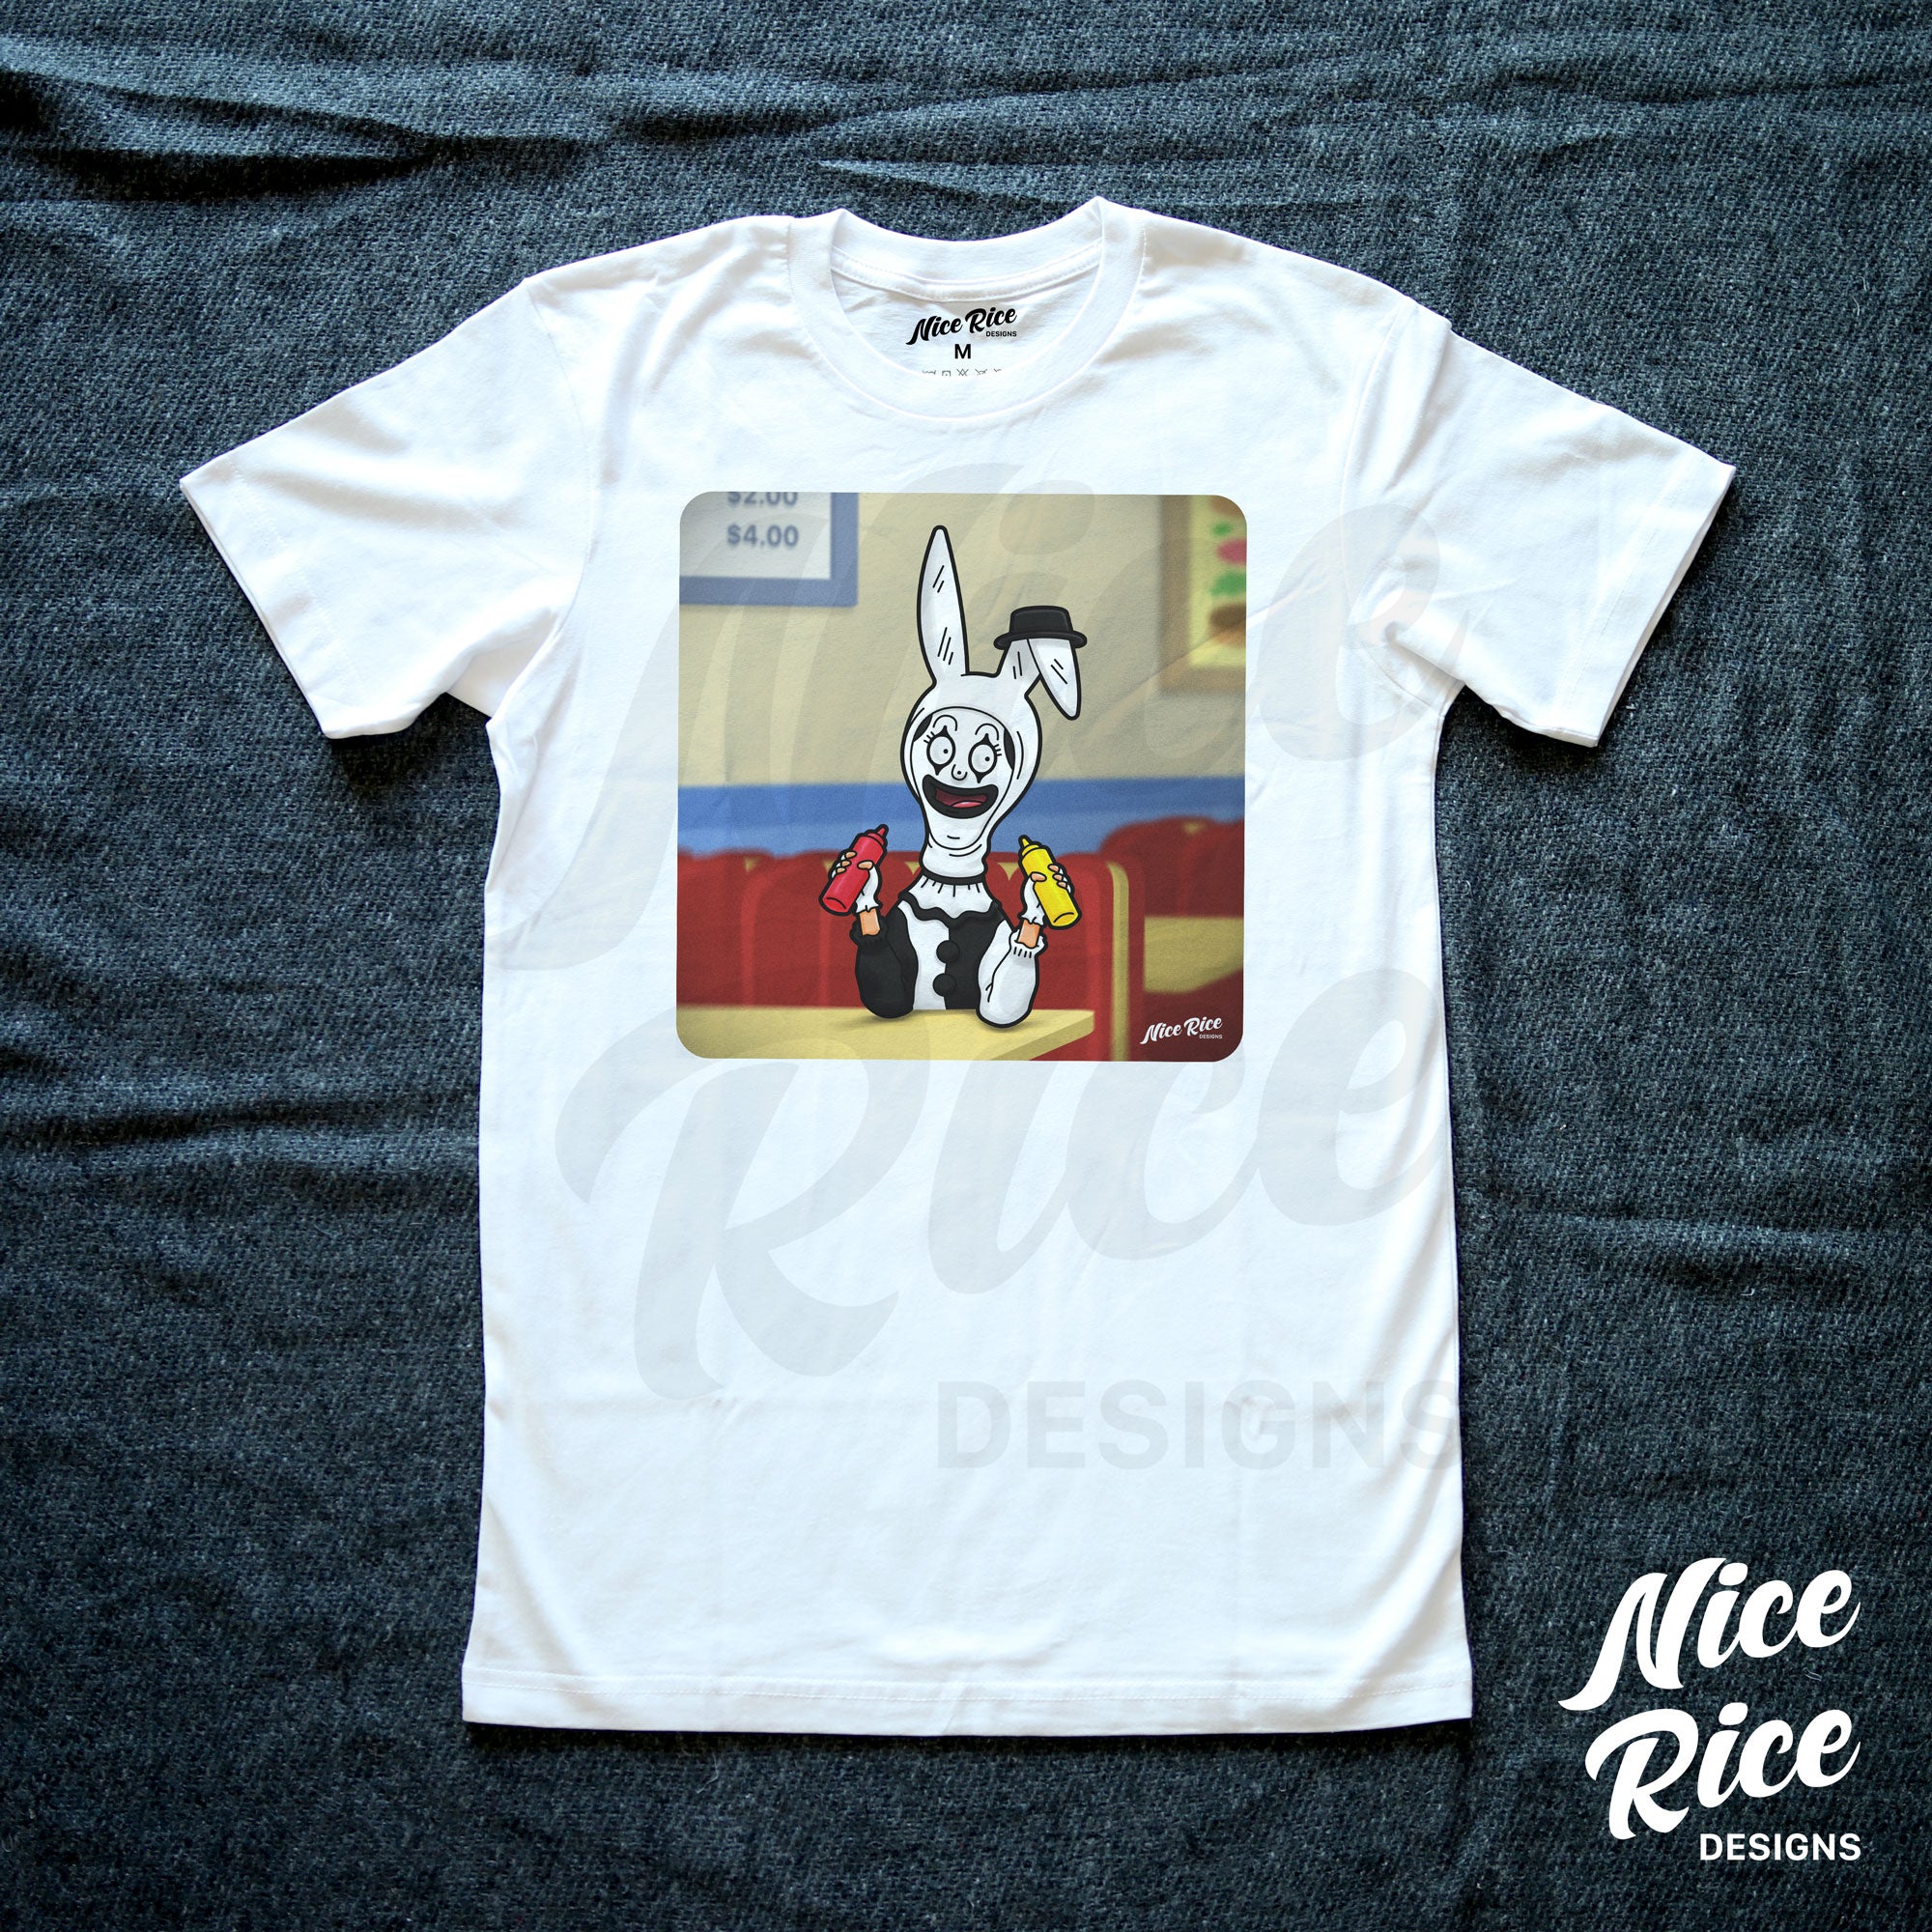 Terrifier Shirt by Nice Rice Designs